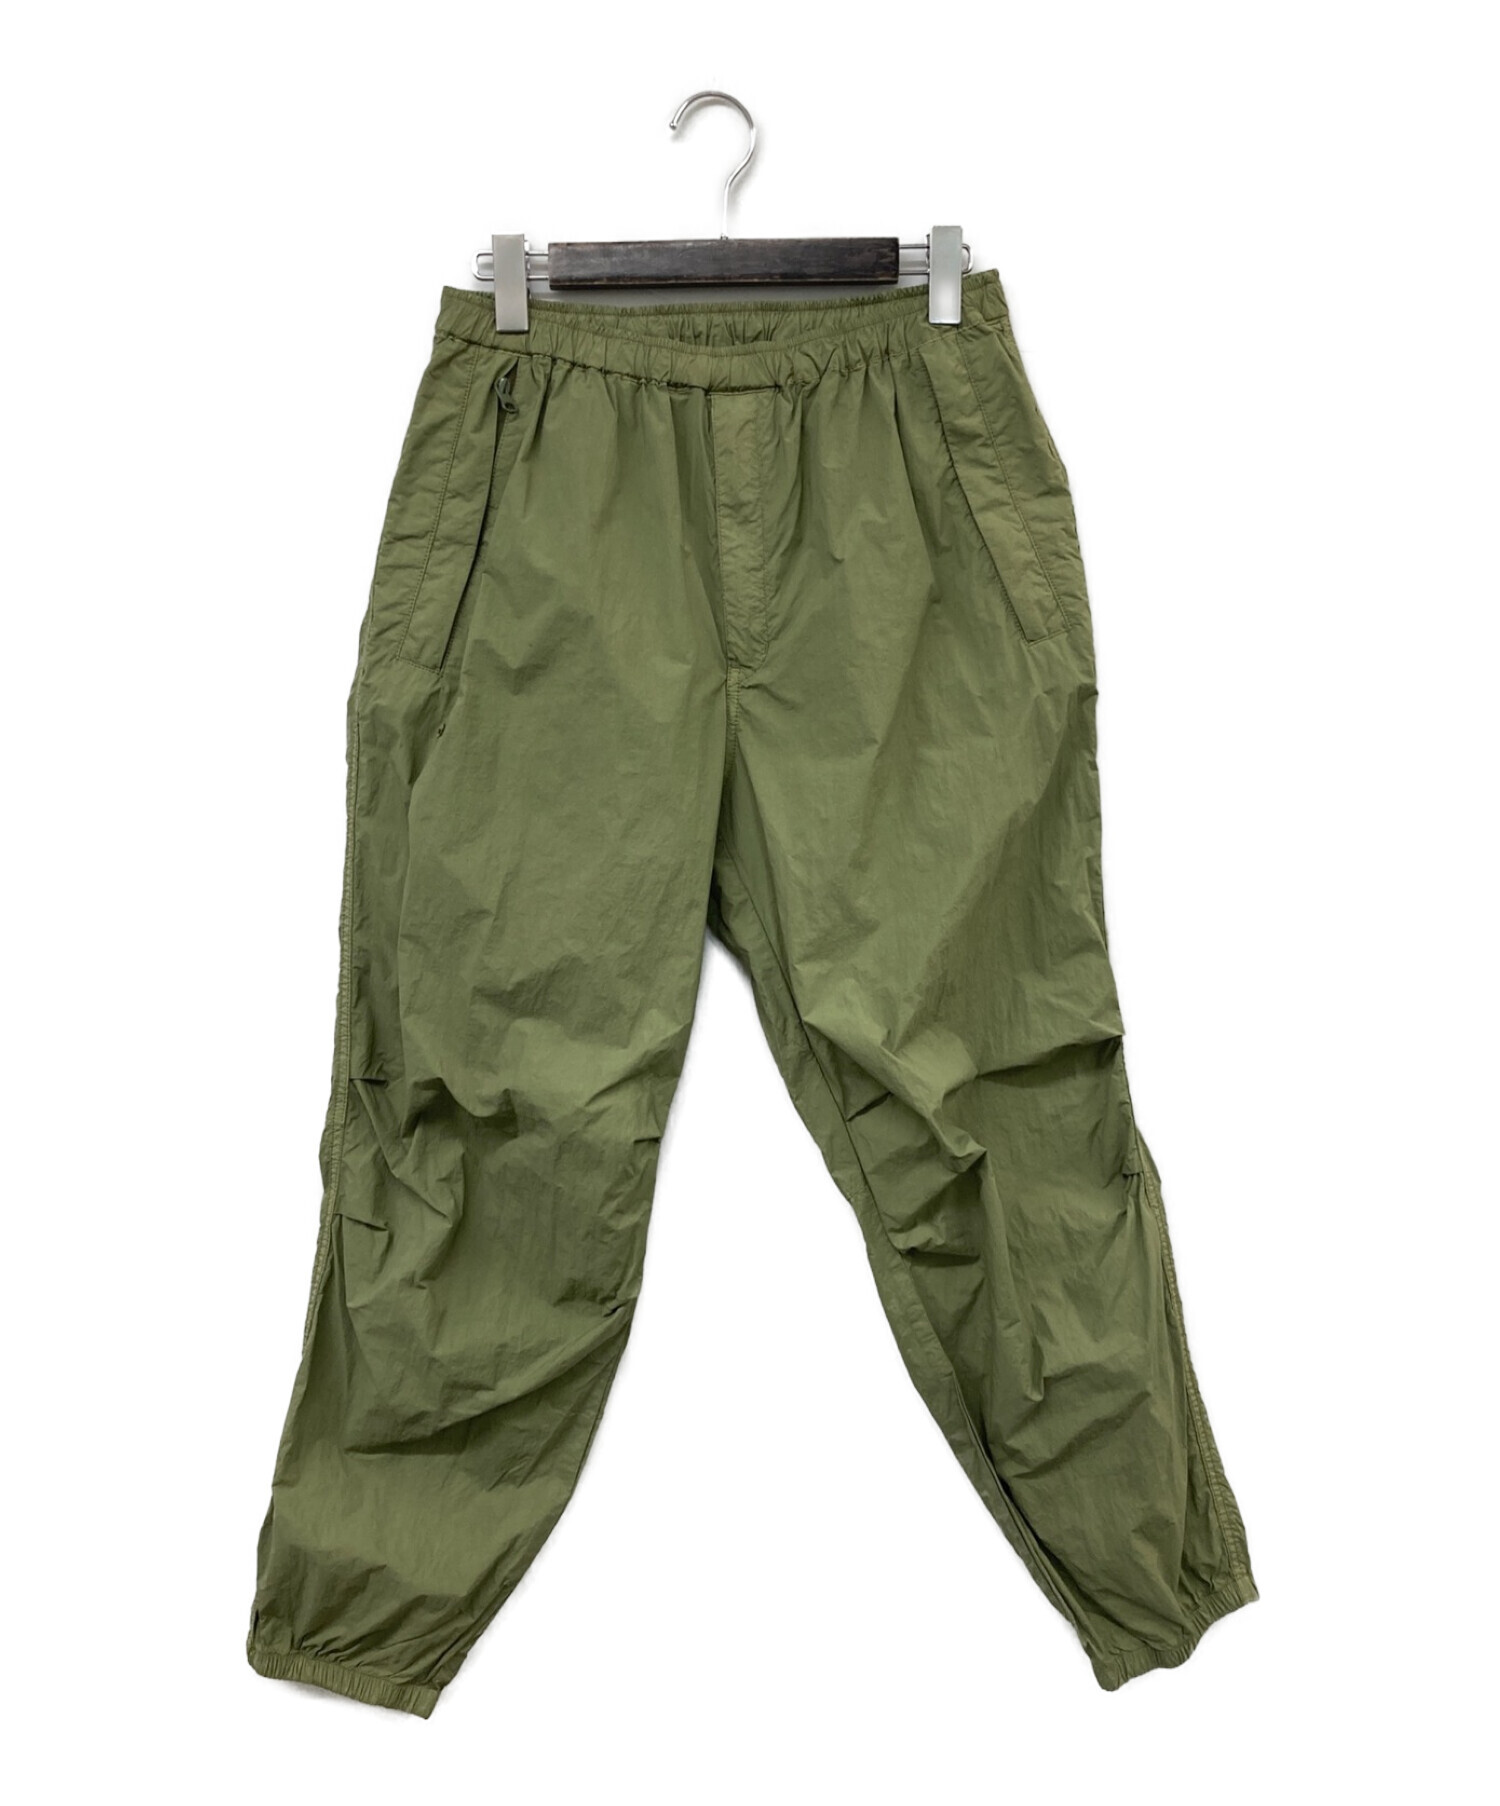 THE NORTHFACE PURPLELABEL (ザ・ノースフェイス パープルレーベル) Garment Dye Mountain Wind  Pants グリーン サイズ:32